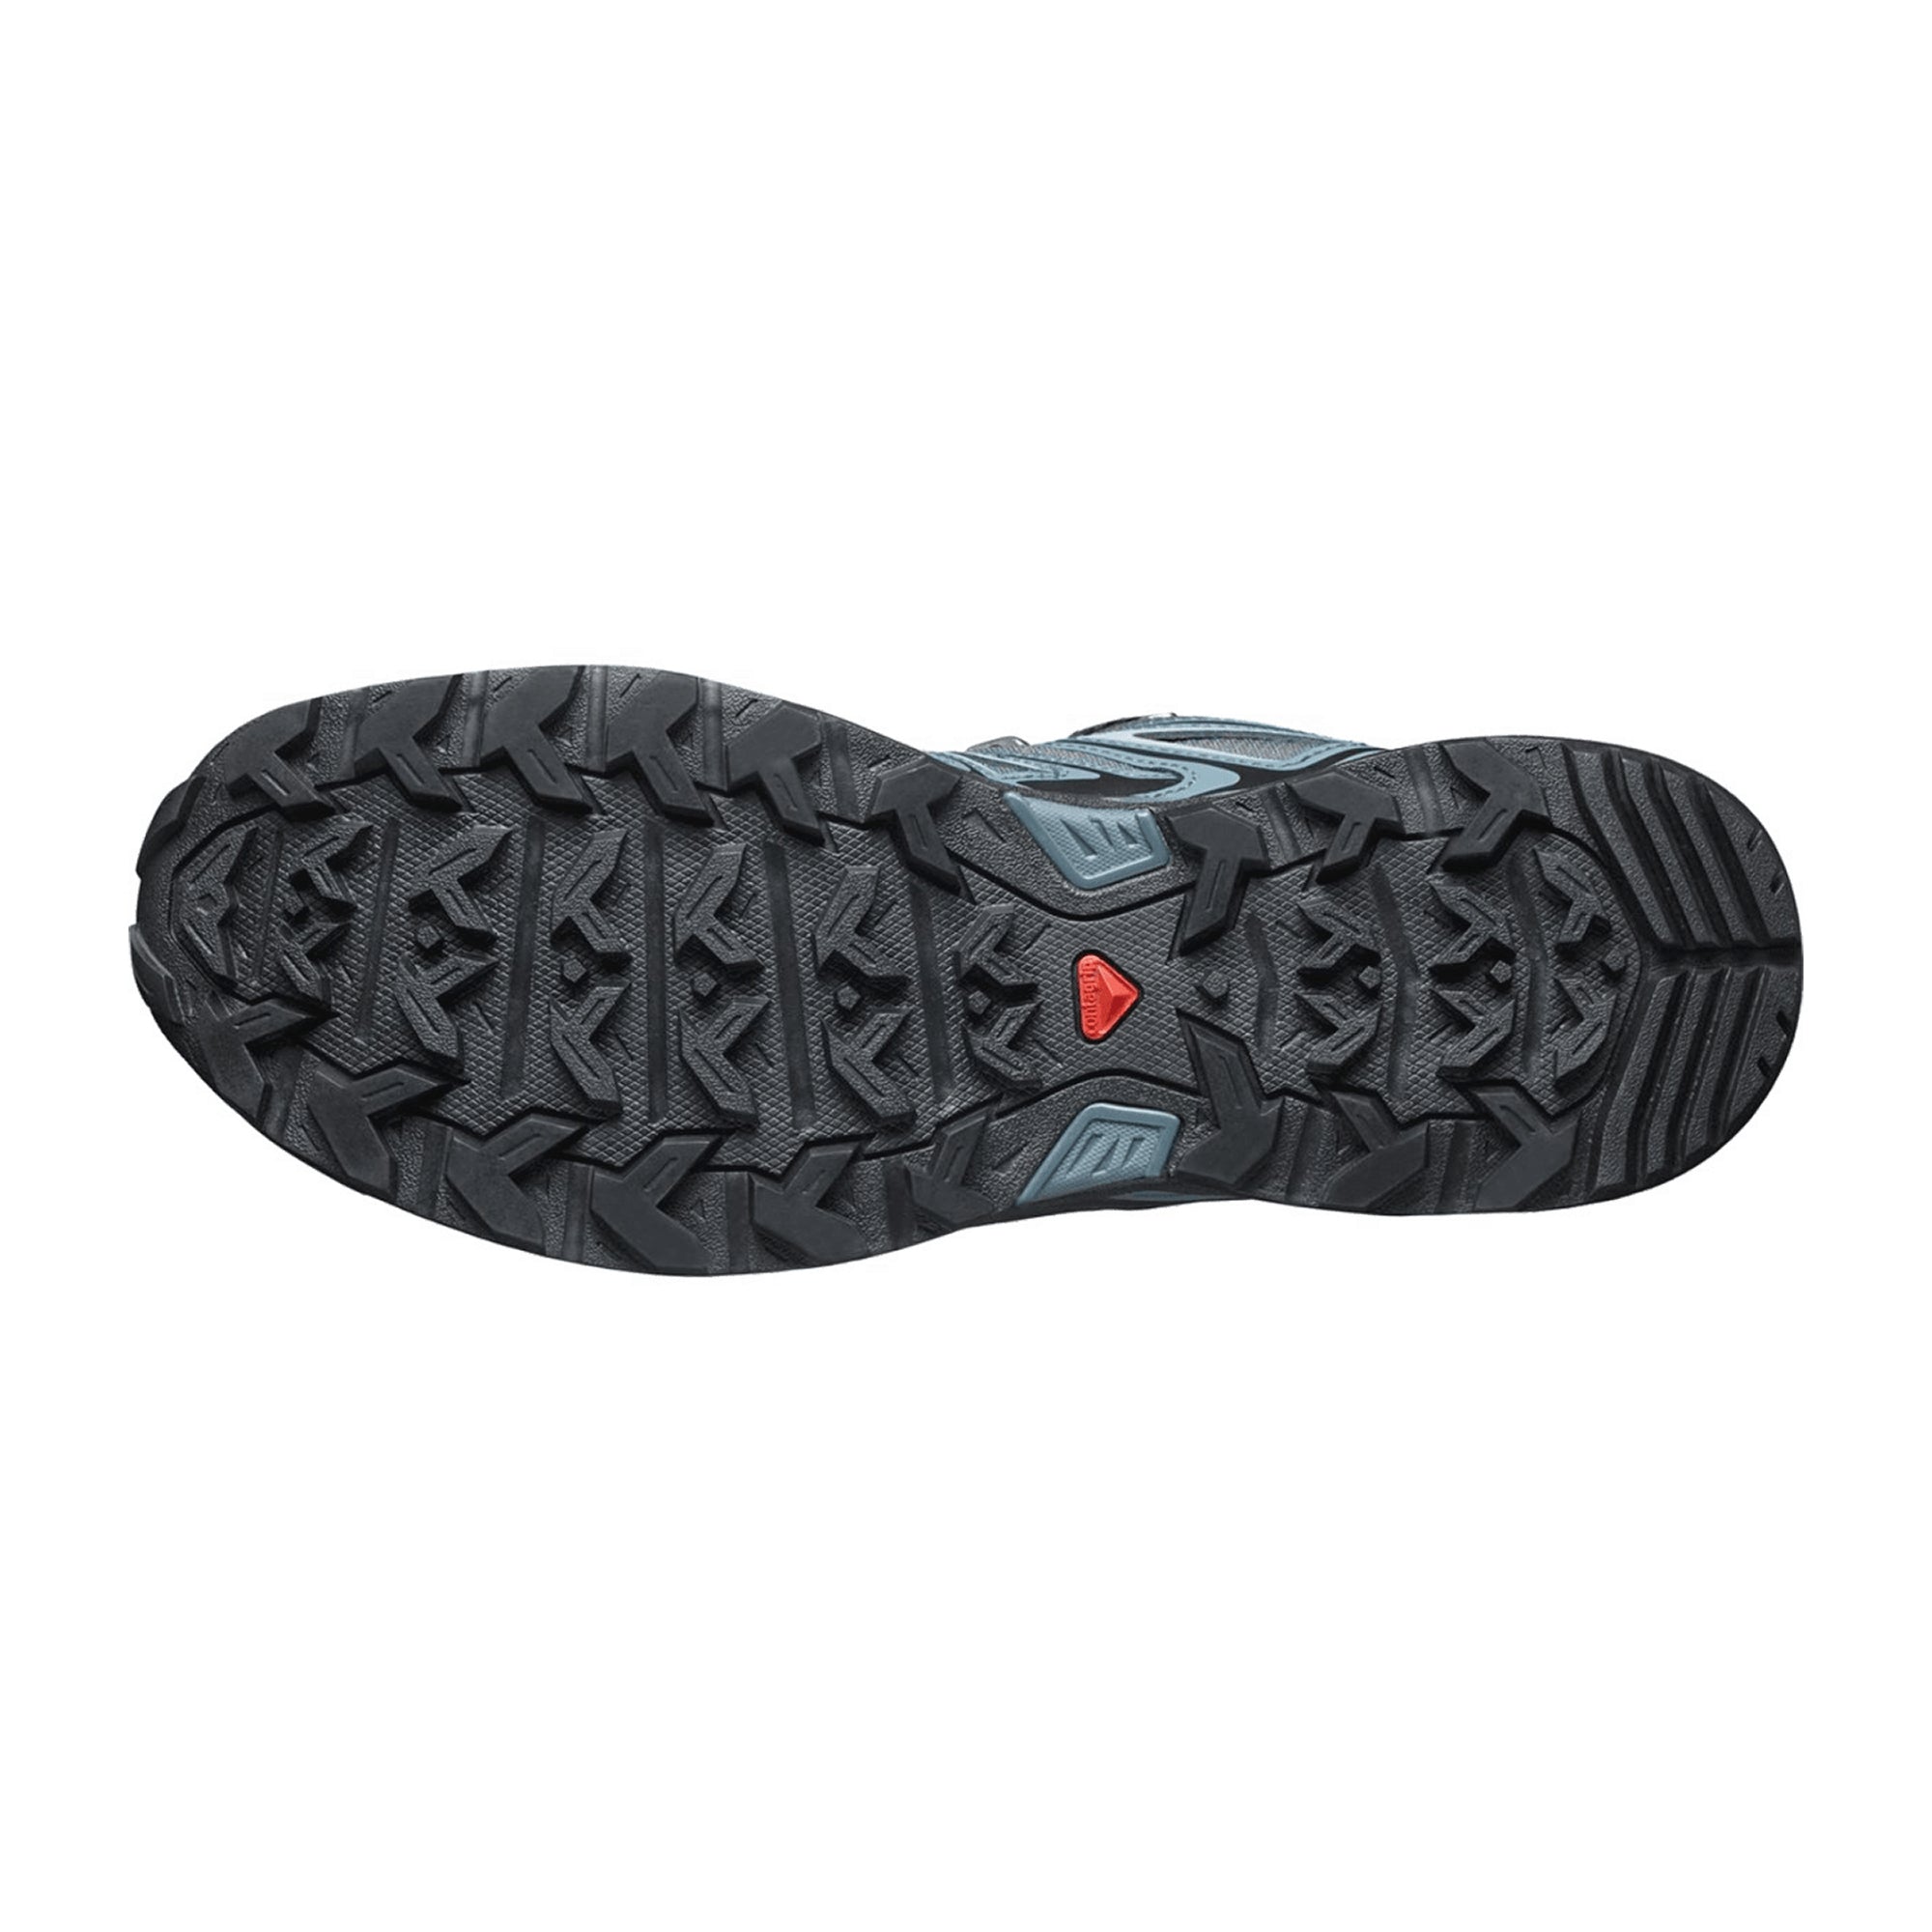 Salomon X Ultra Pioneer Mid GTX for men, gray, shoes